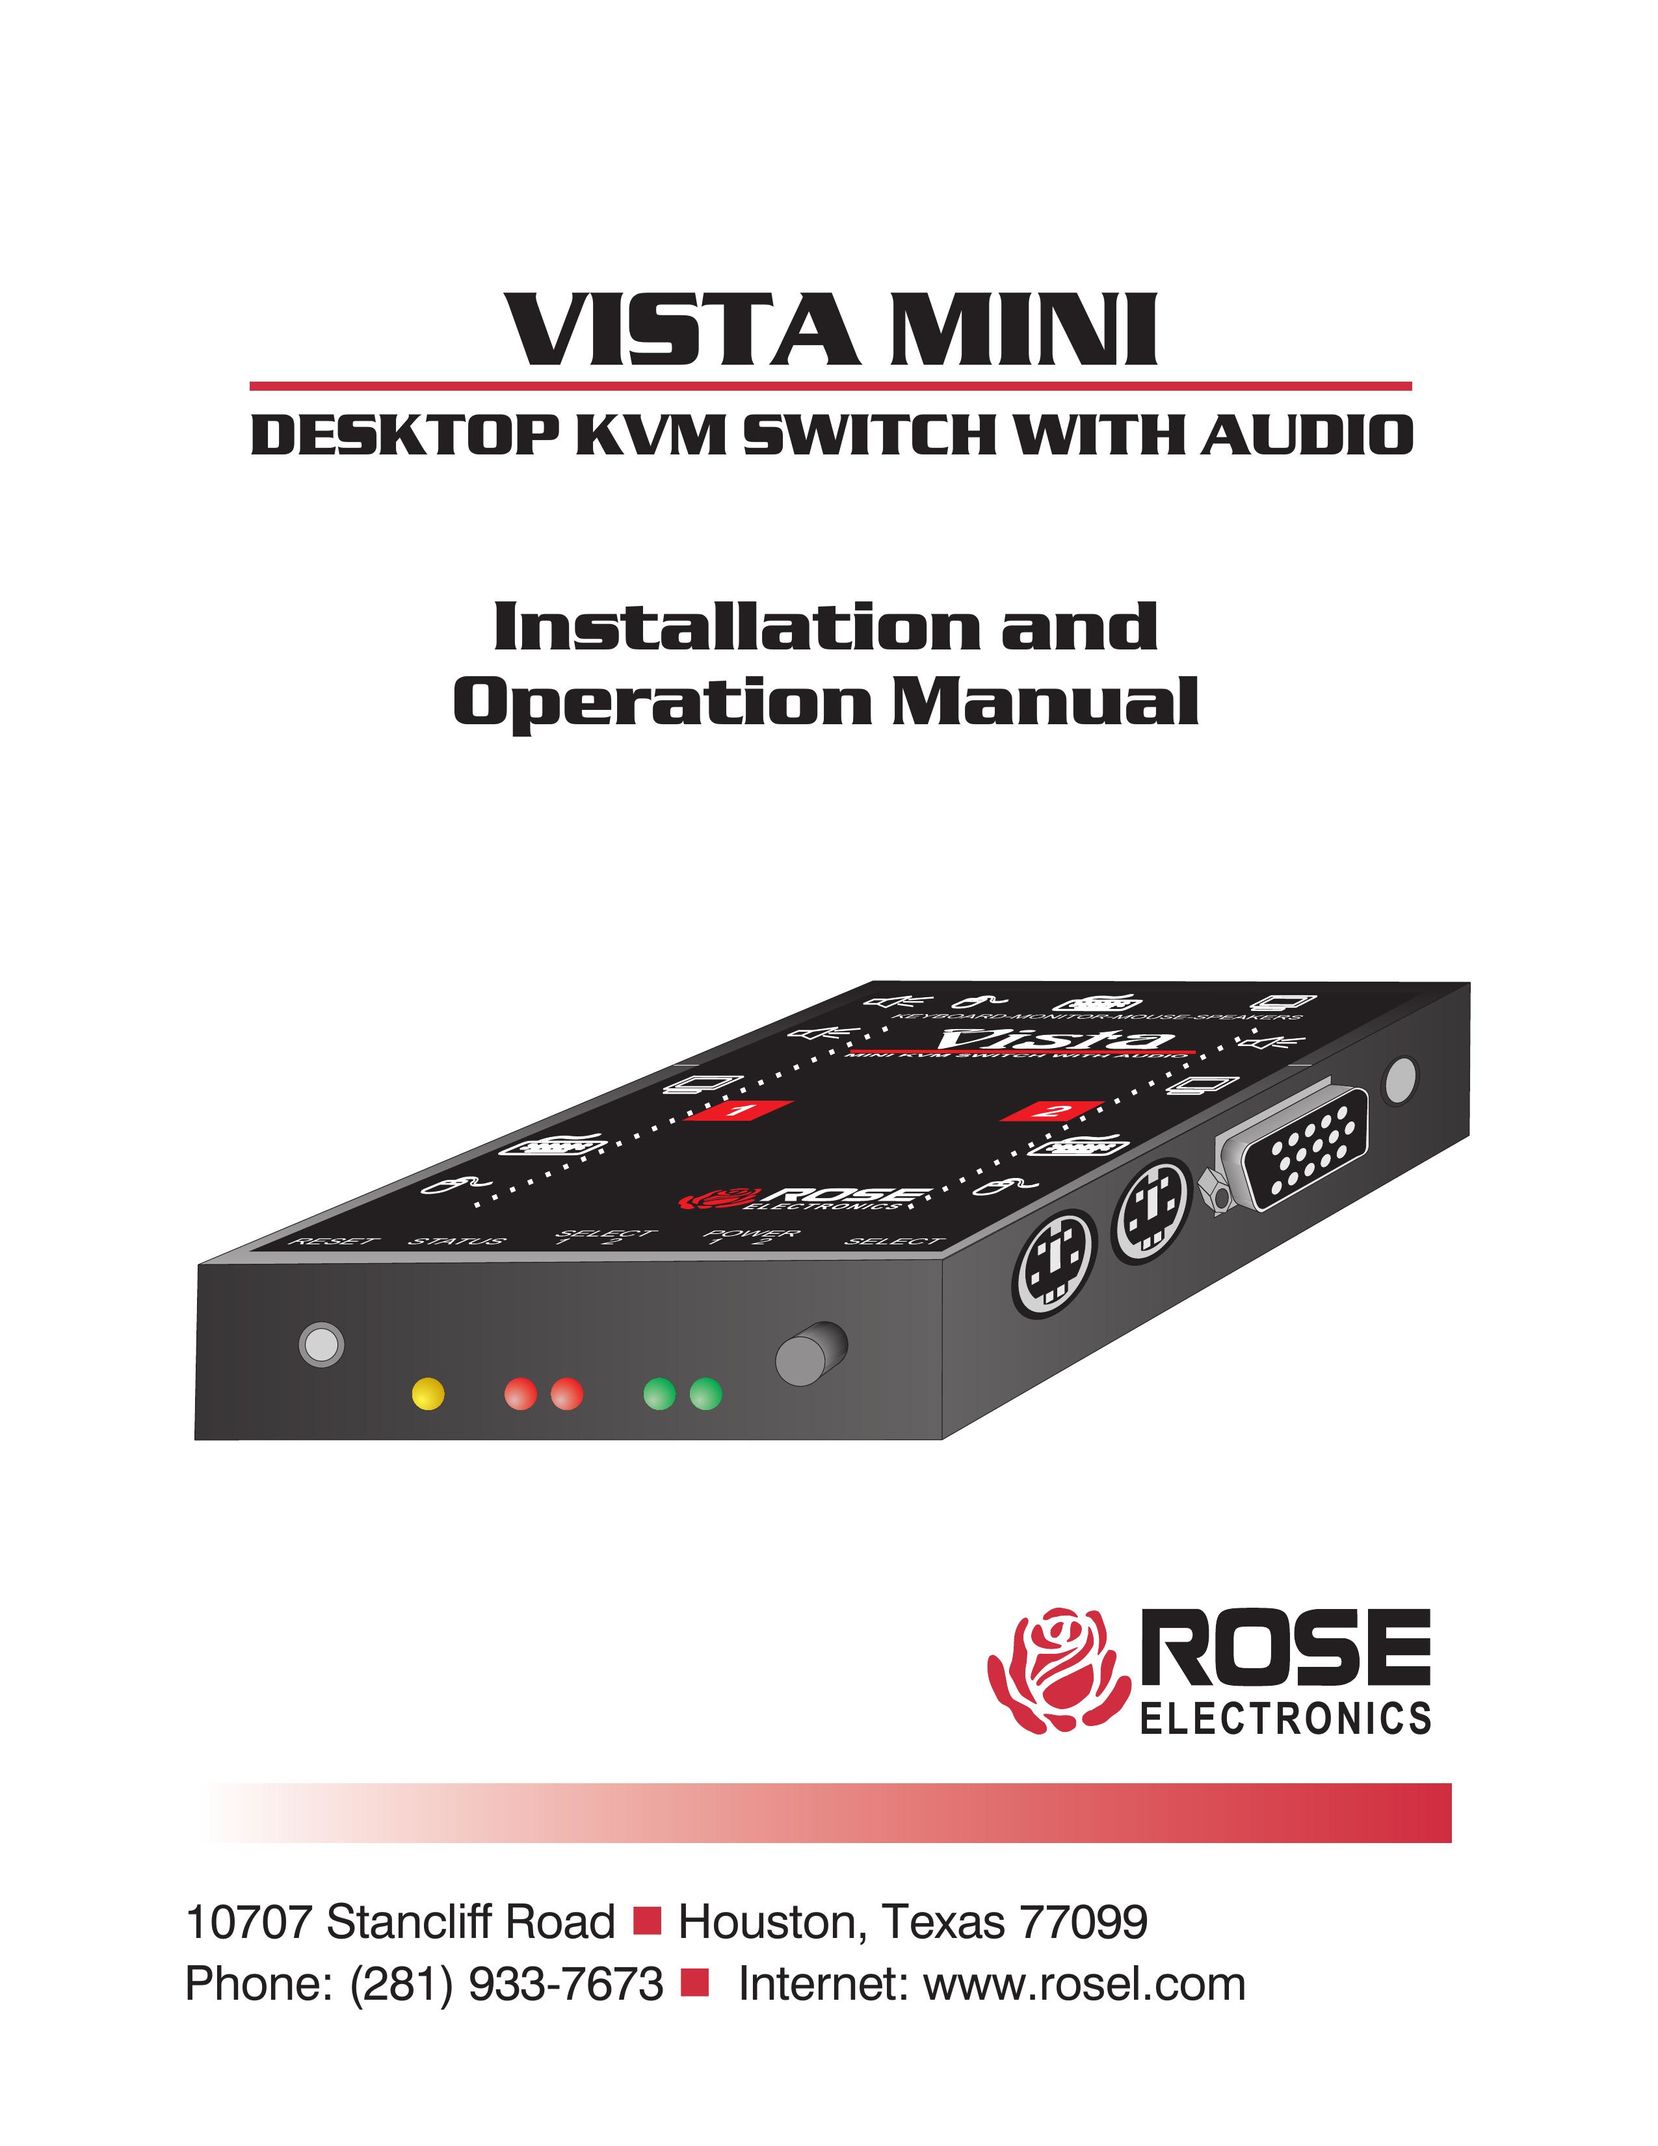 Rose electronic Vista Mini Switch User Manual